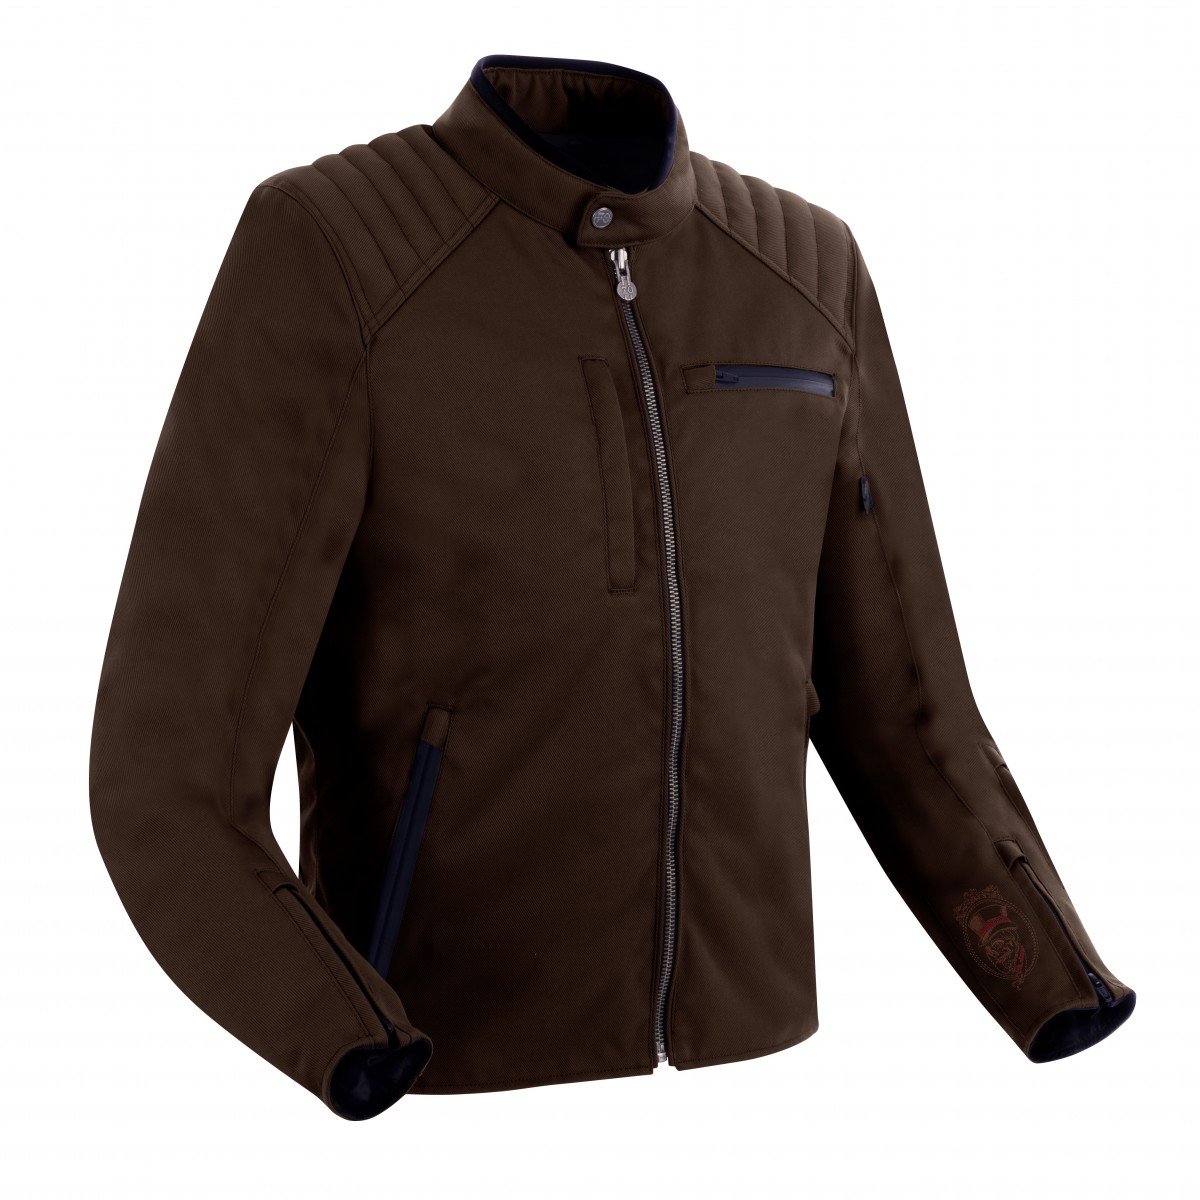 Image of Segura Eternal Jacket Brown Size S ID 3660815168578